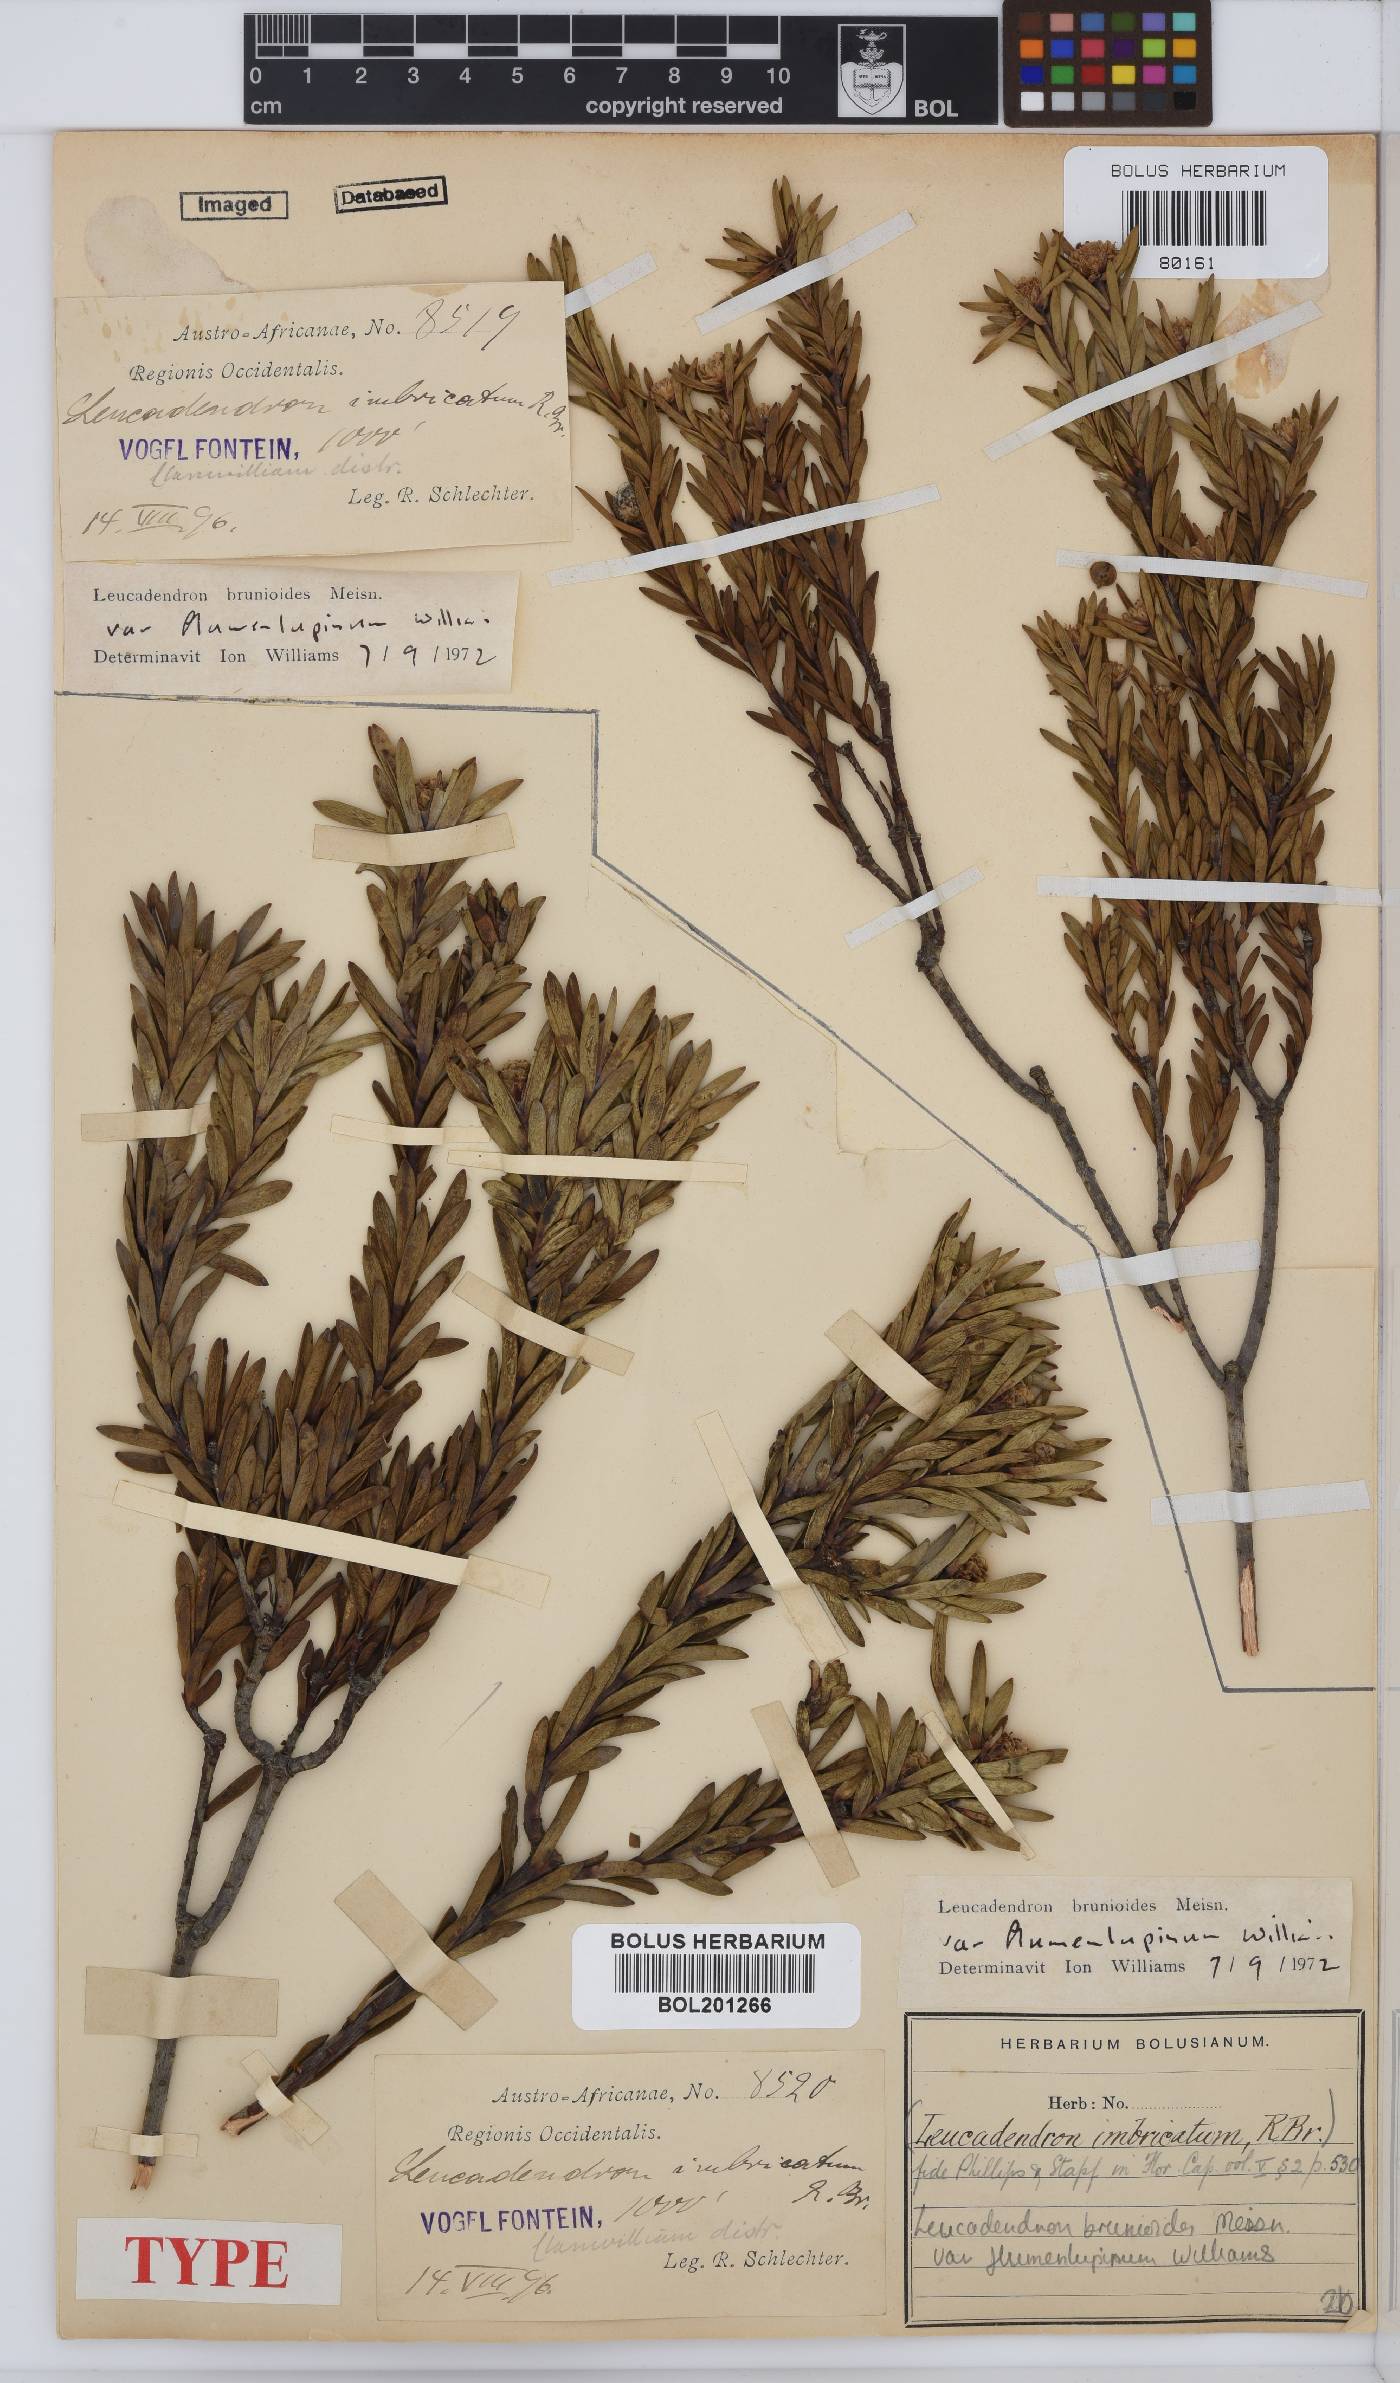 Leucadendron brunioides var. flumenlupinum image